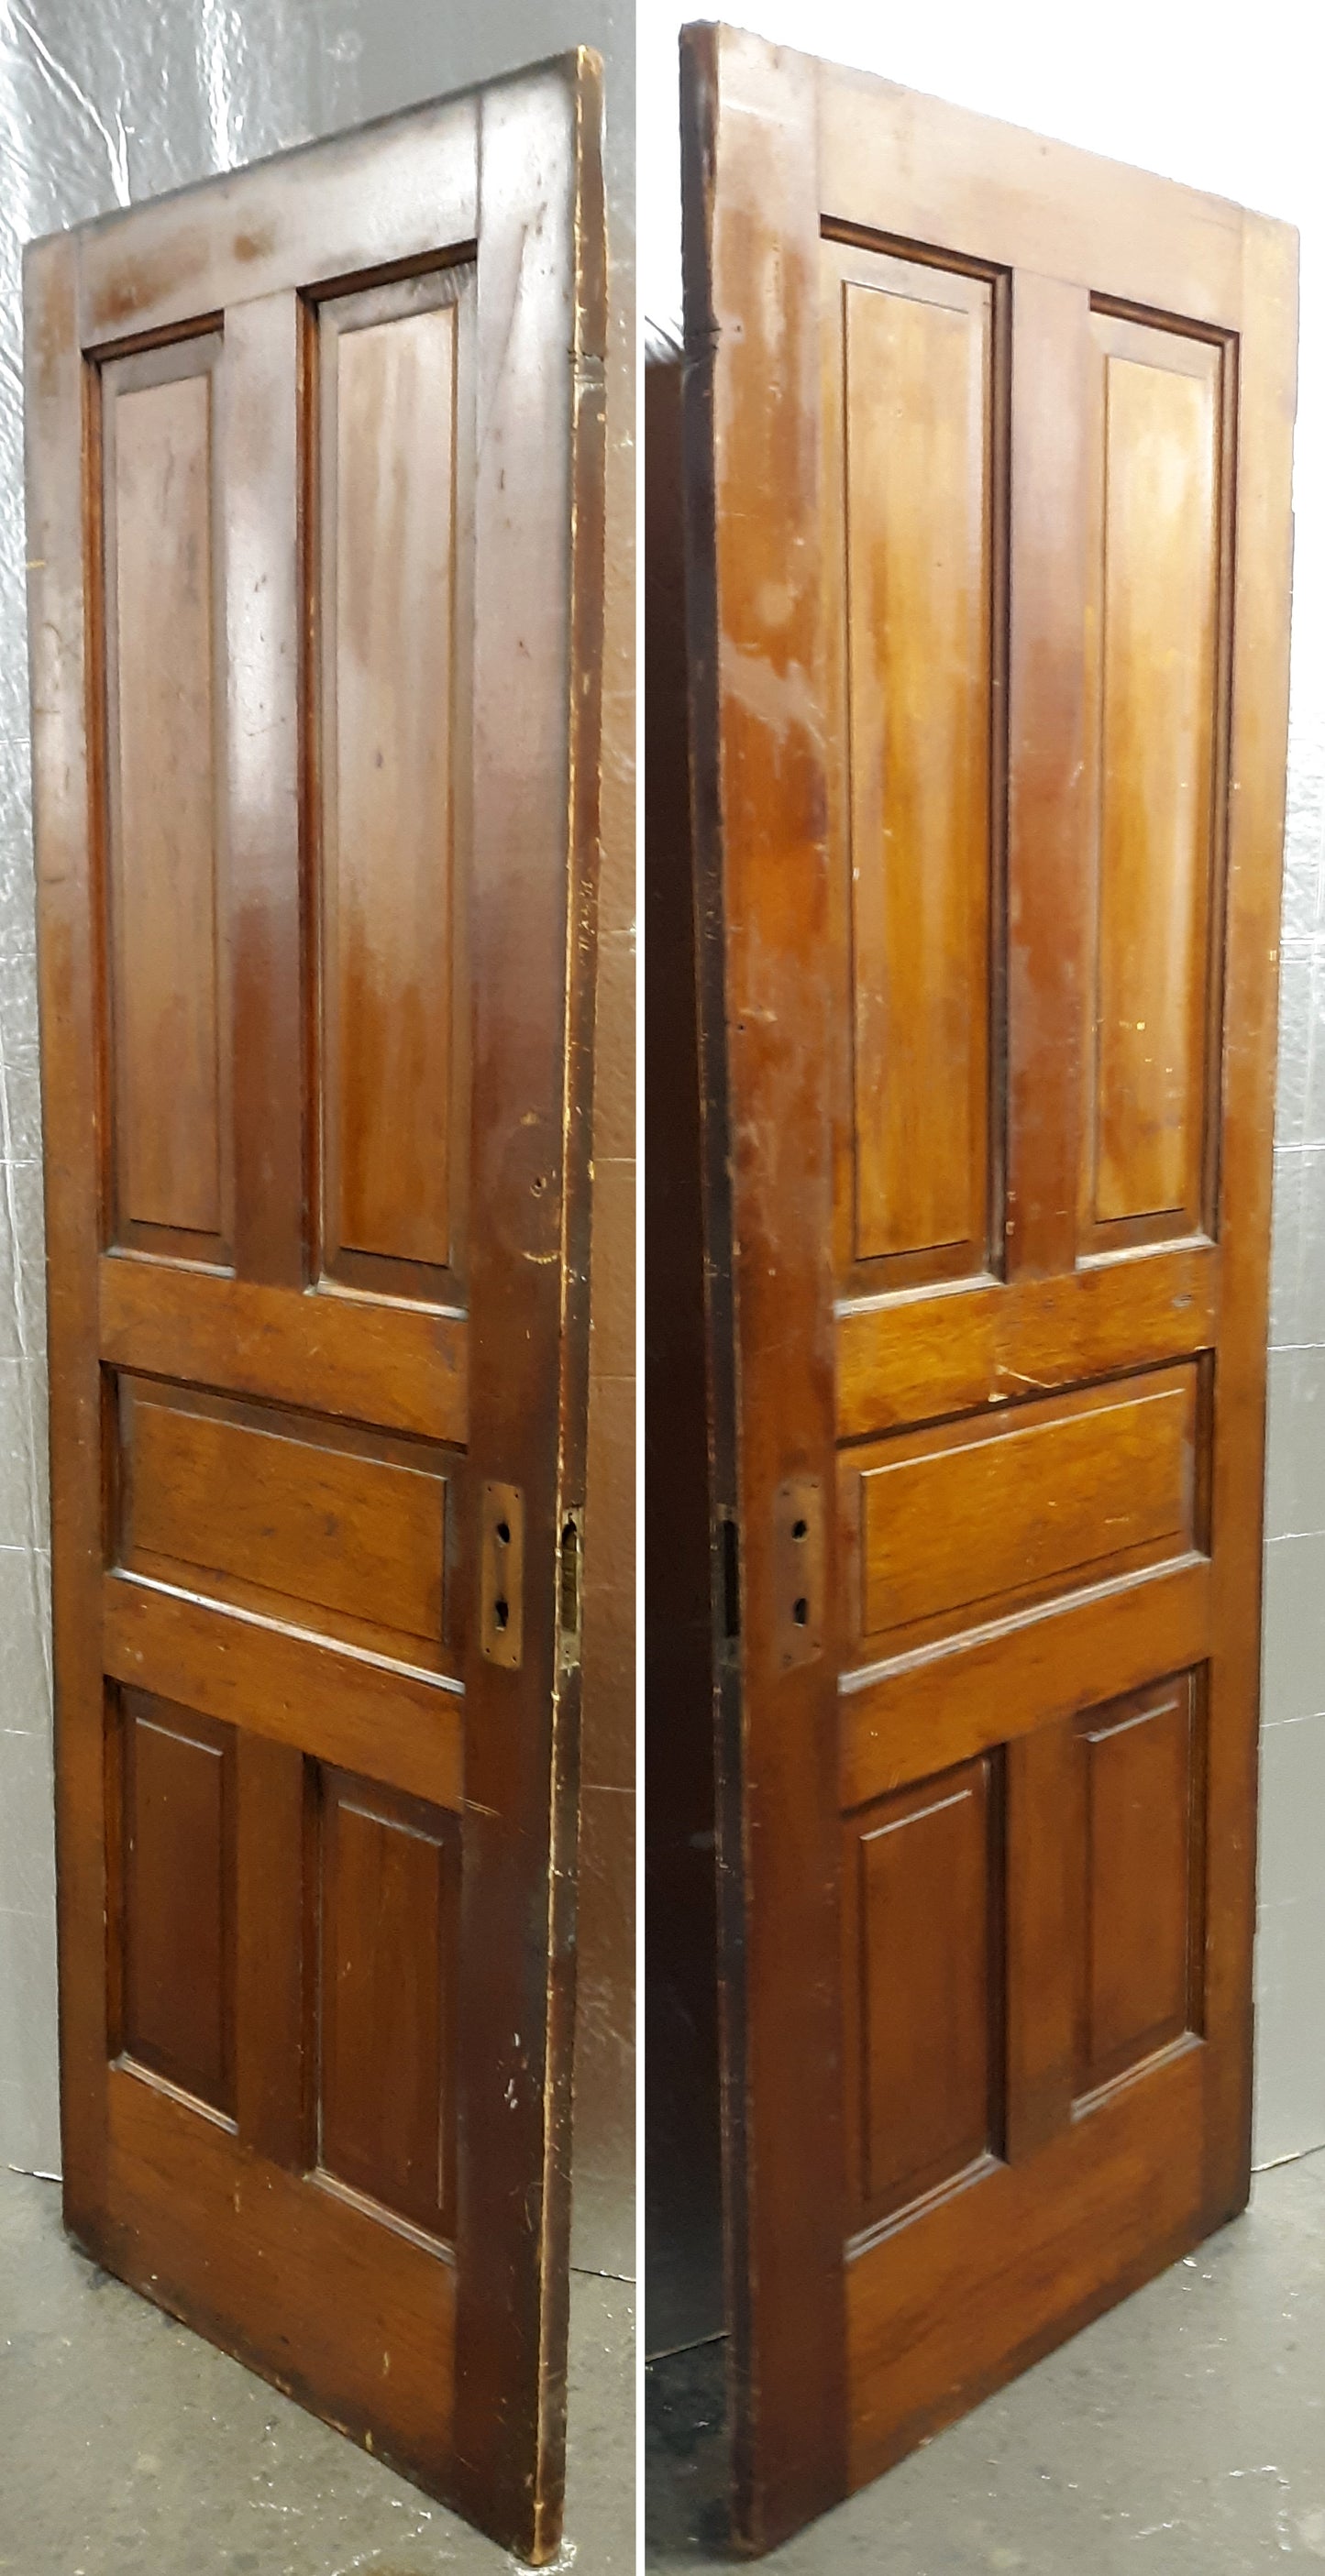 29.5"x78" Antique Vintage Old Reclaimed Salvaged Victorian Interior SOLID Wood Wooden Door 5 Panels